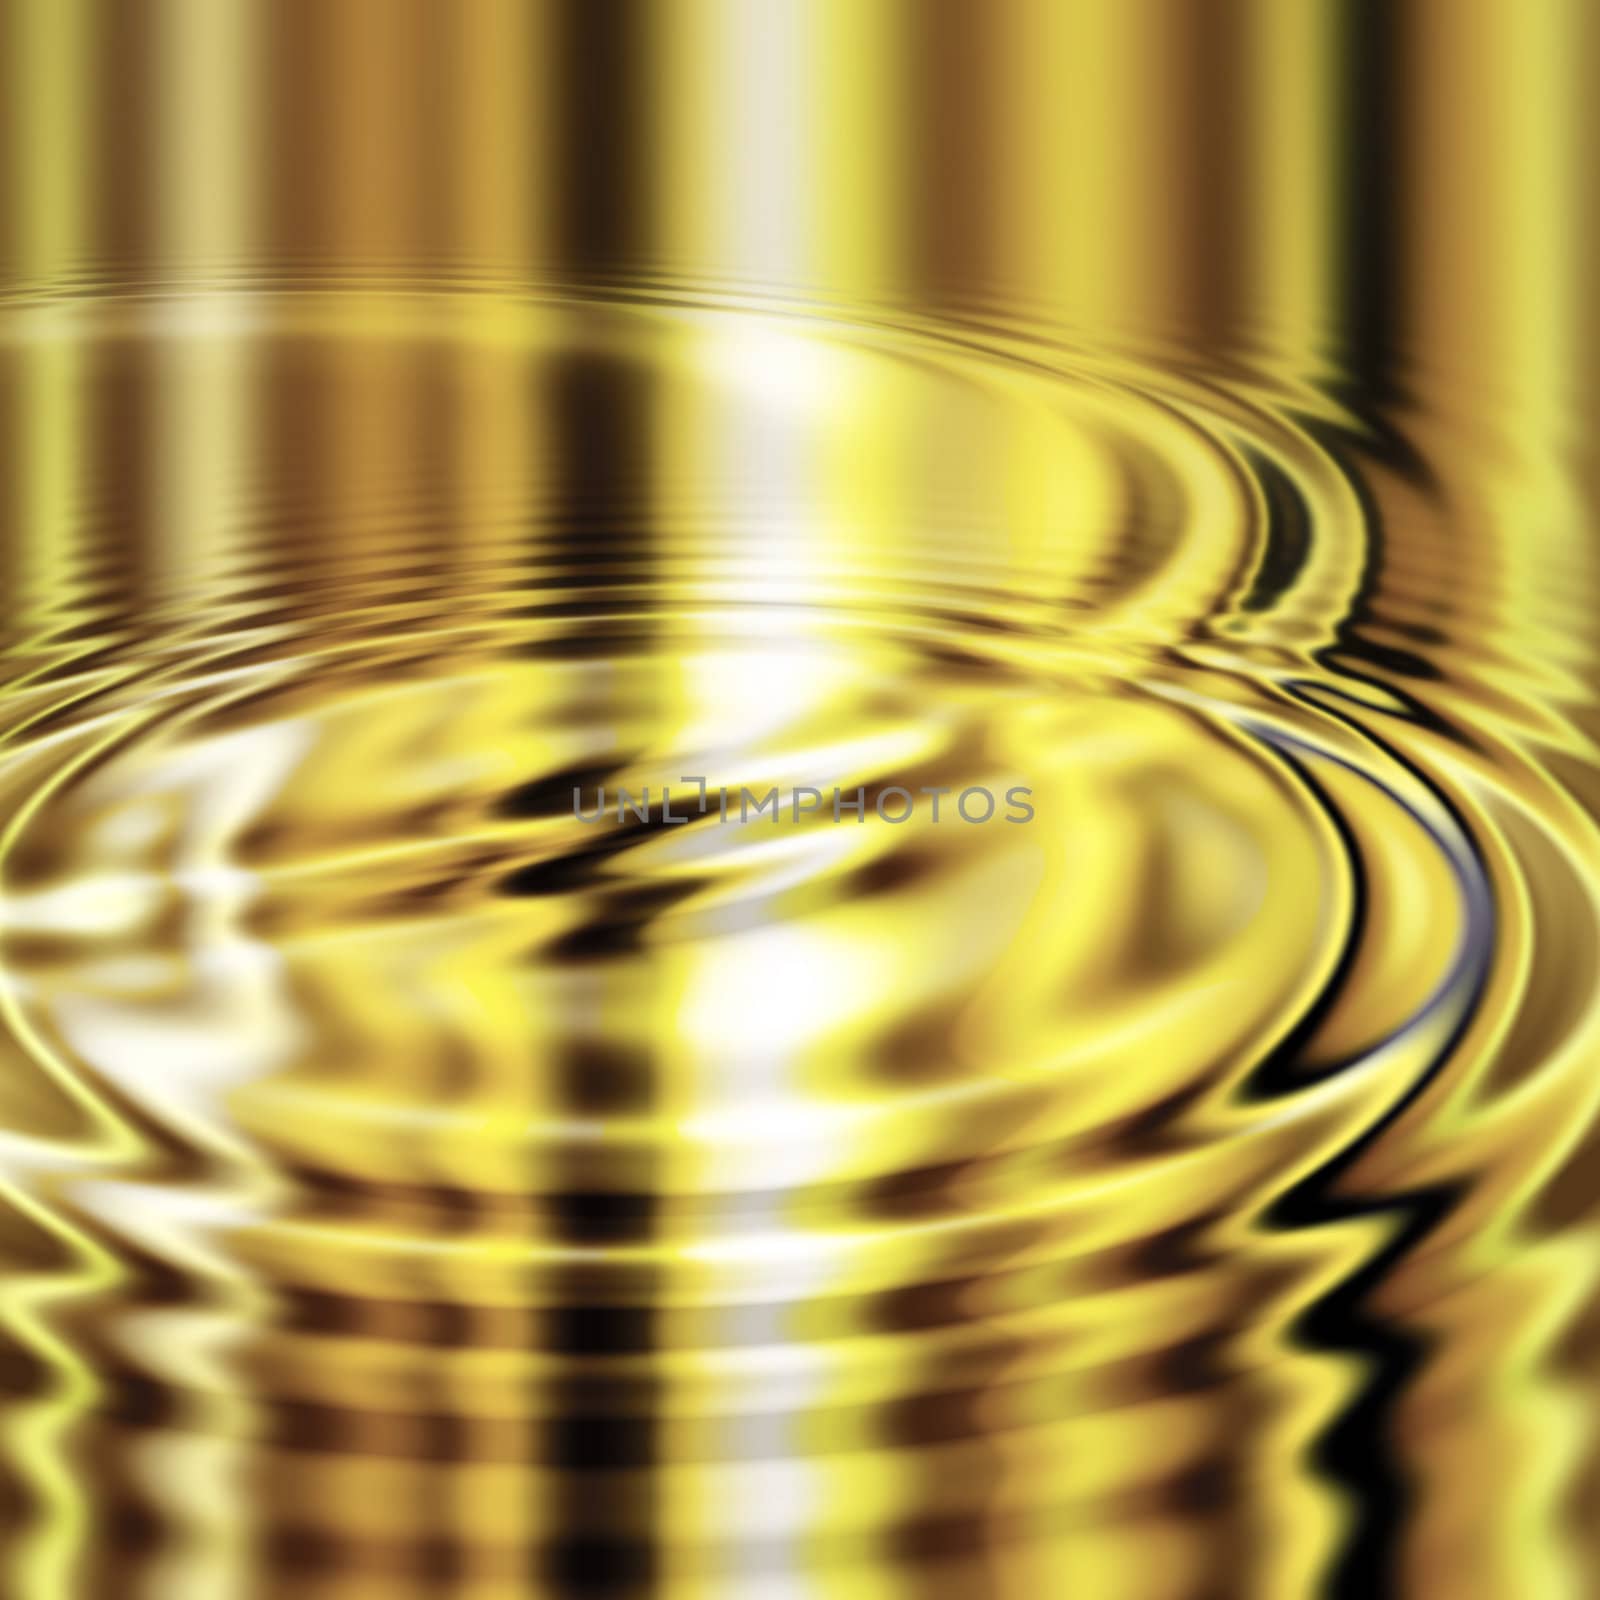 ripples in the liquid molten gold golden metal